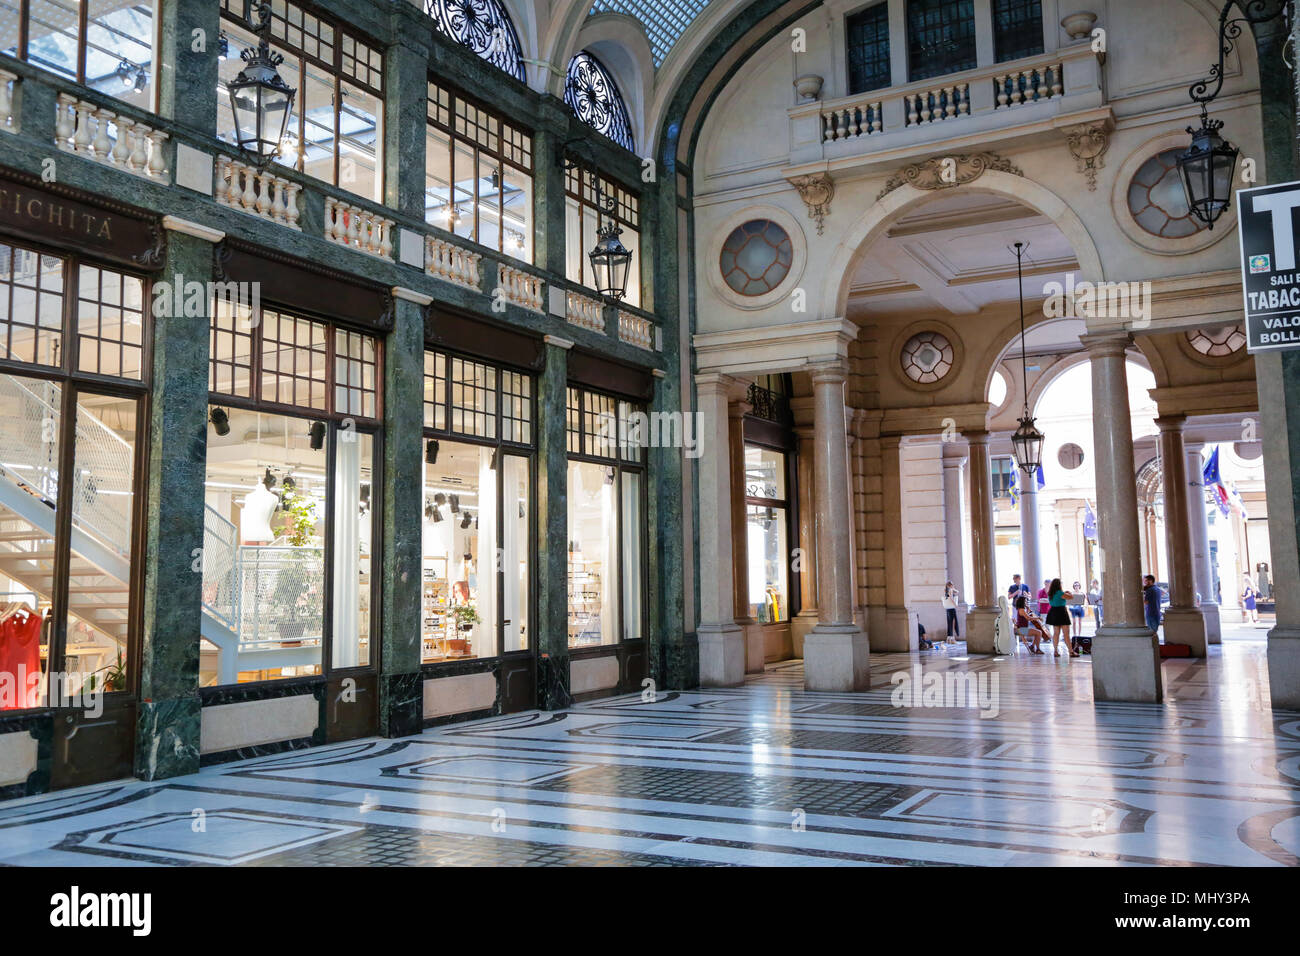 Galleria San Federico, historical gallery with Lux cinema, Interior, Turin, Italy Stock Photo